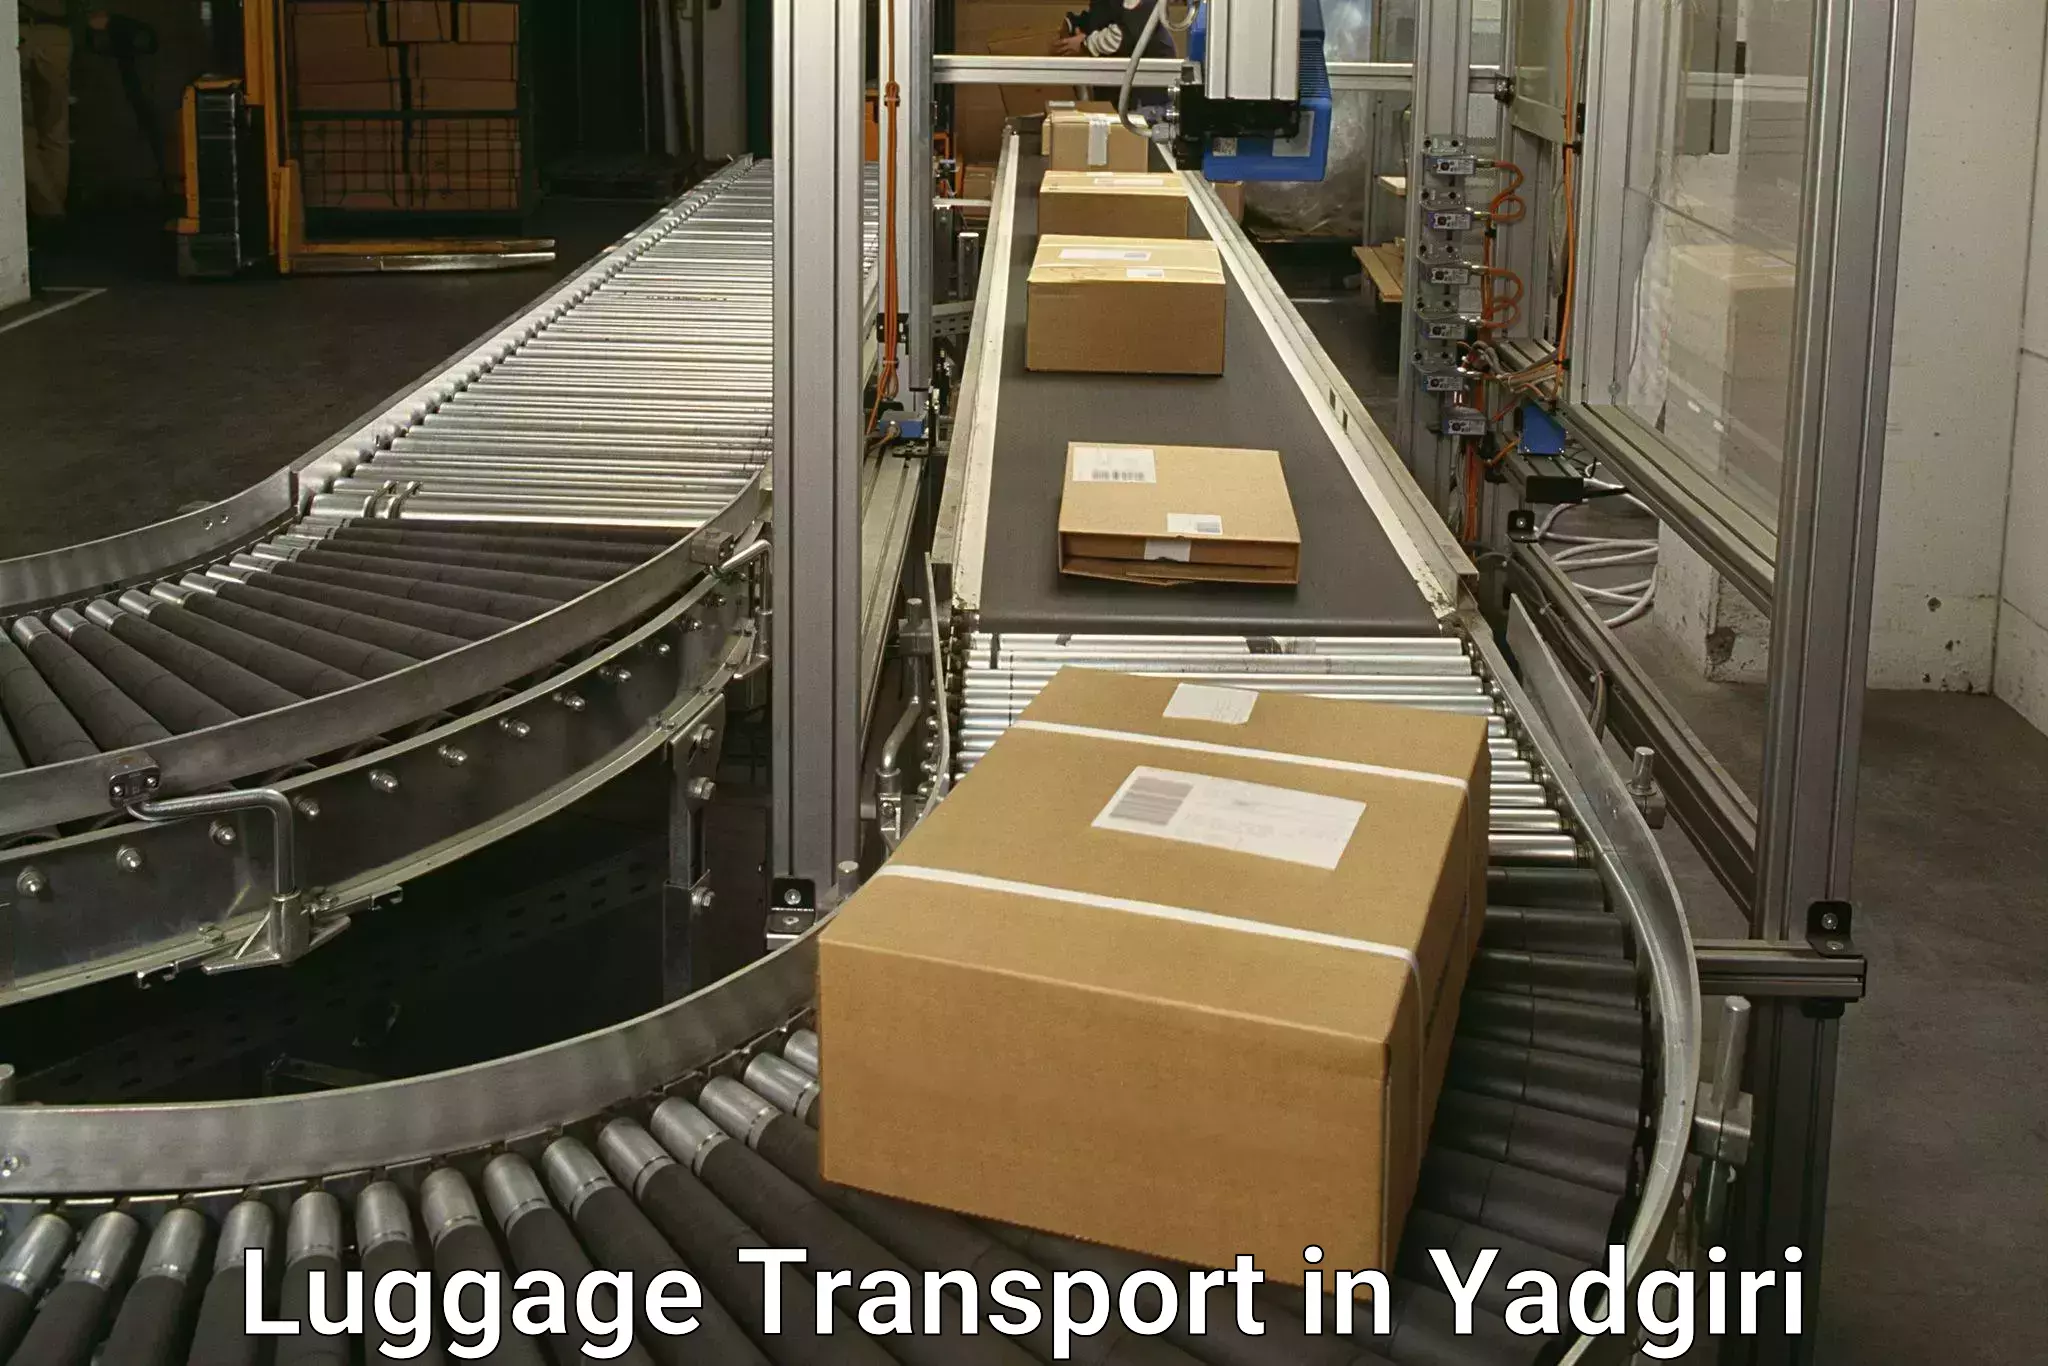 Baggage transport updates in Yadgiri